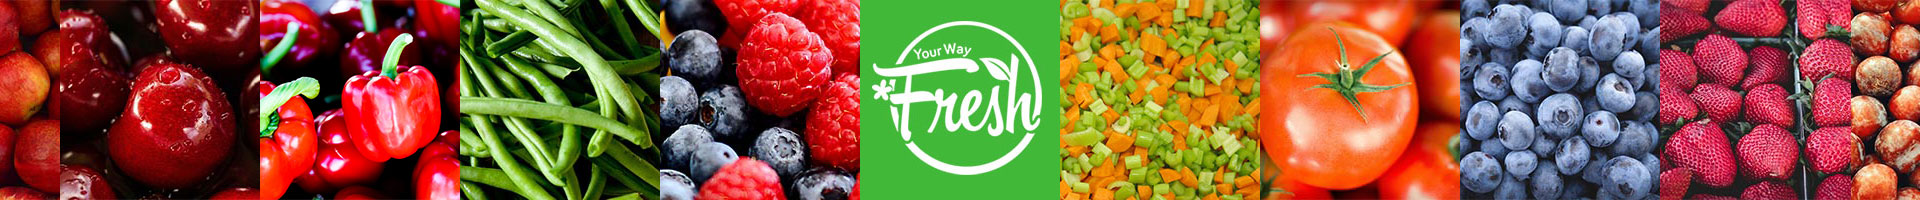 Your Way*Fresh Variety